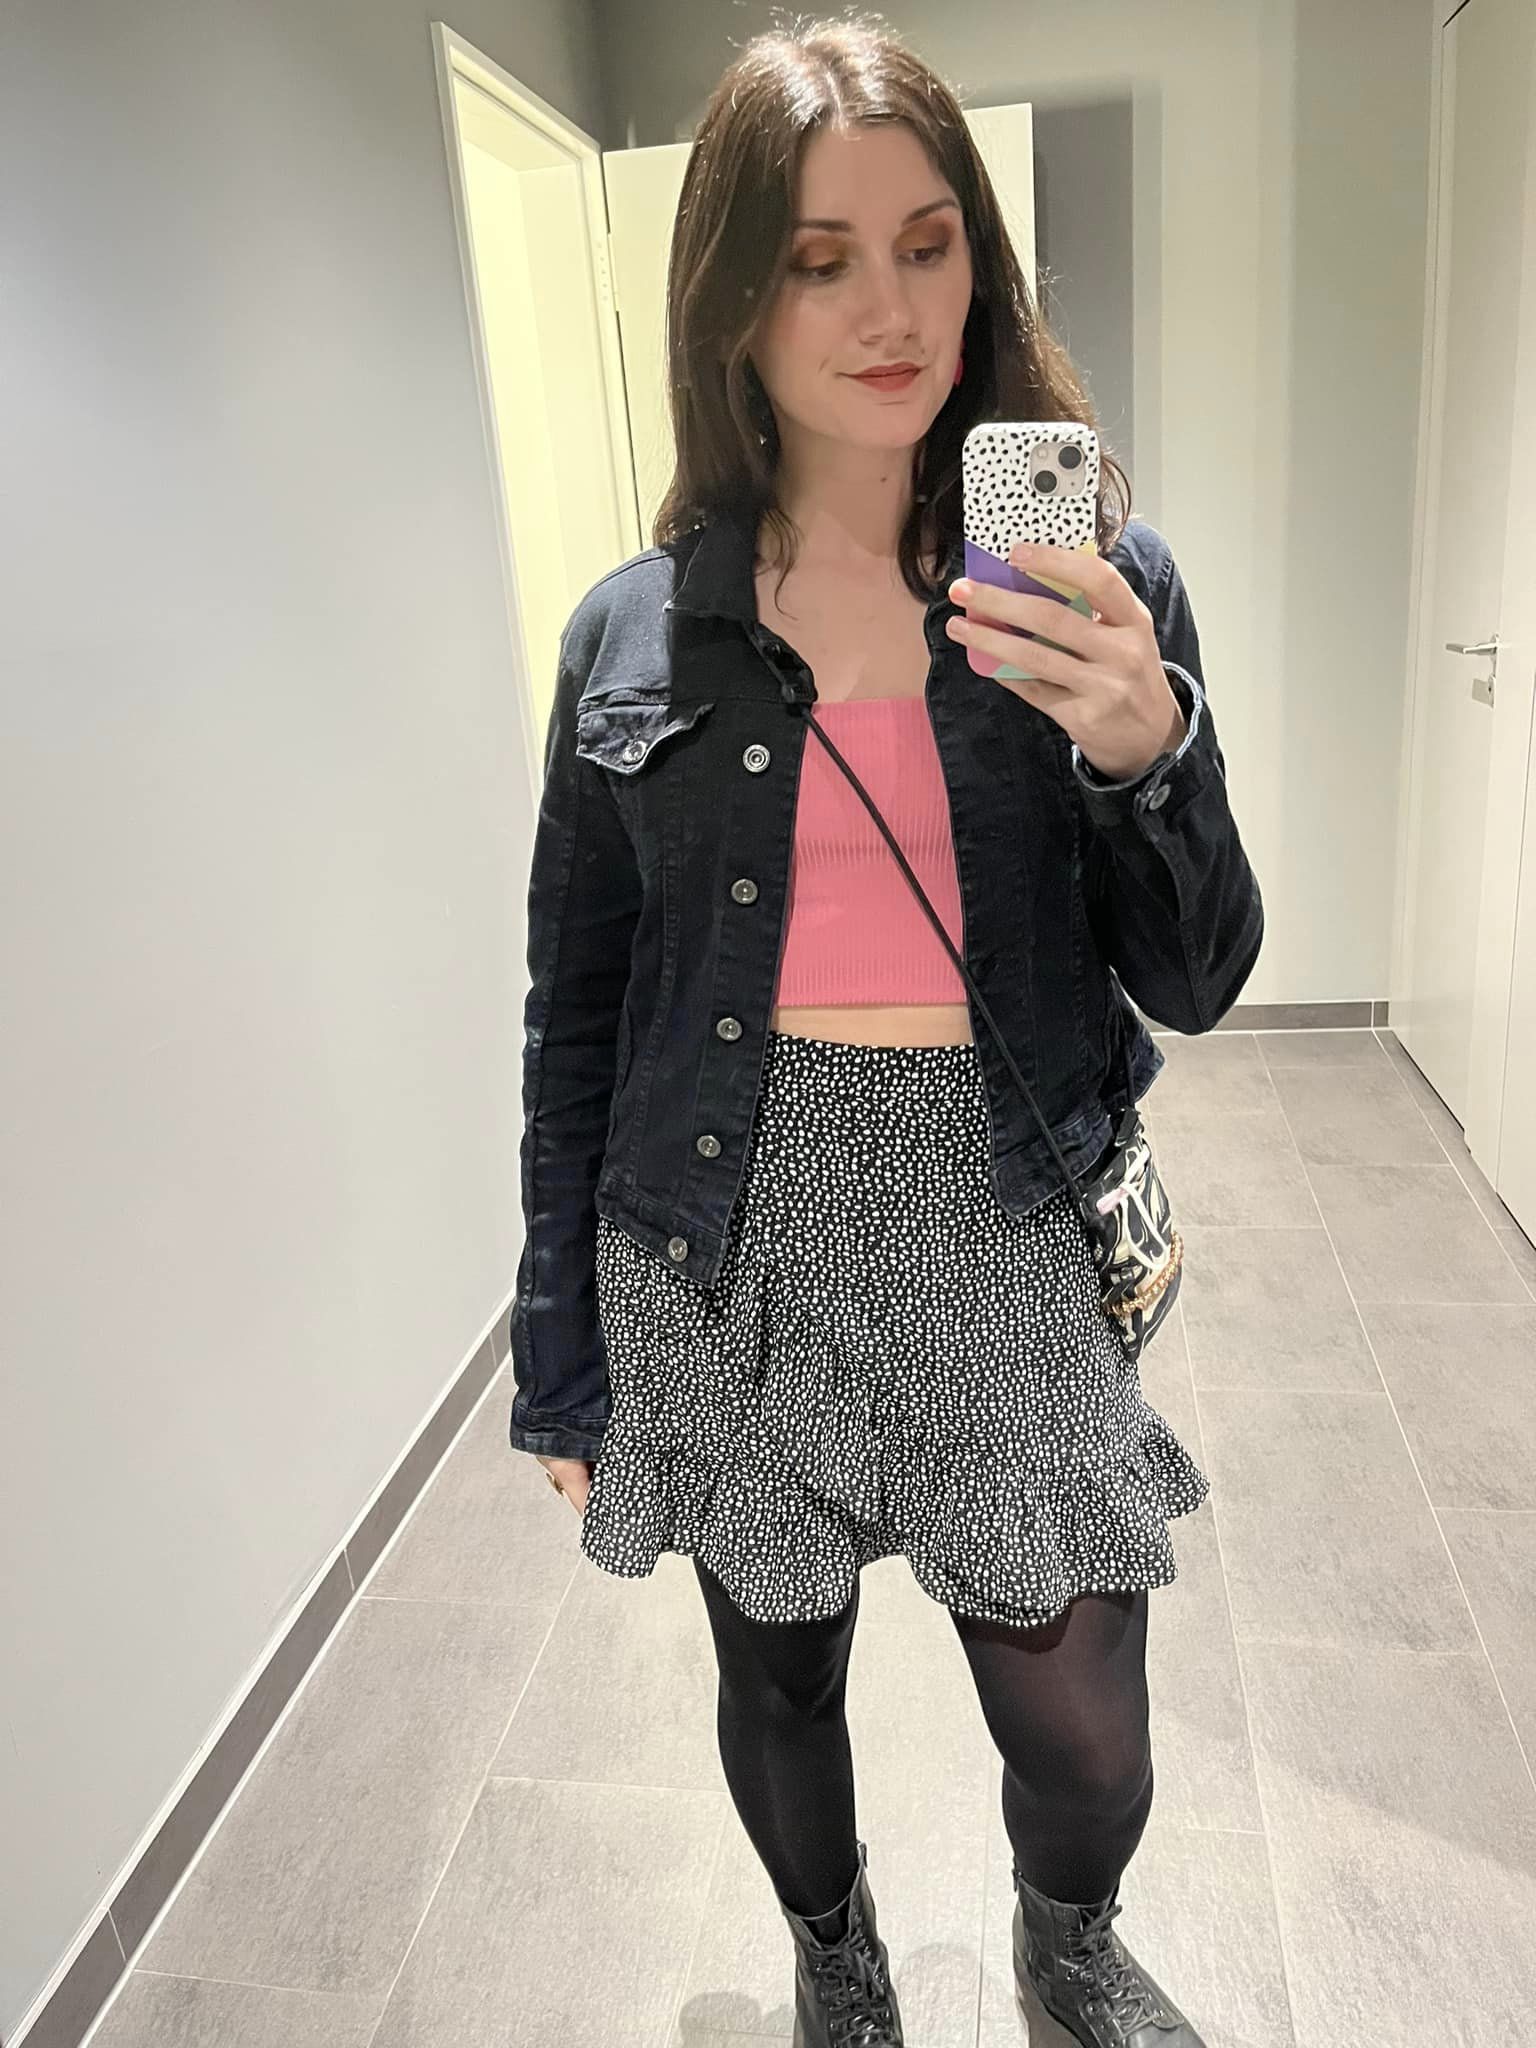 A mirror selfie of Jillian in a pink top and black skirt